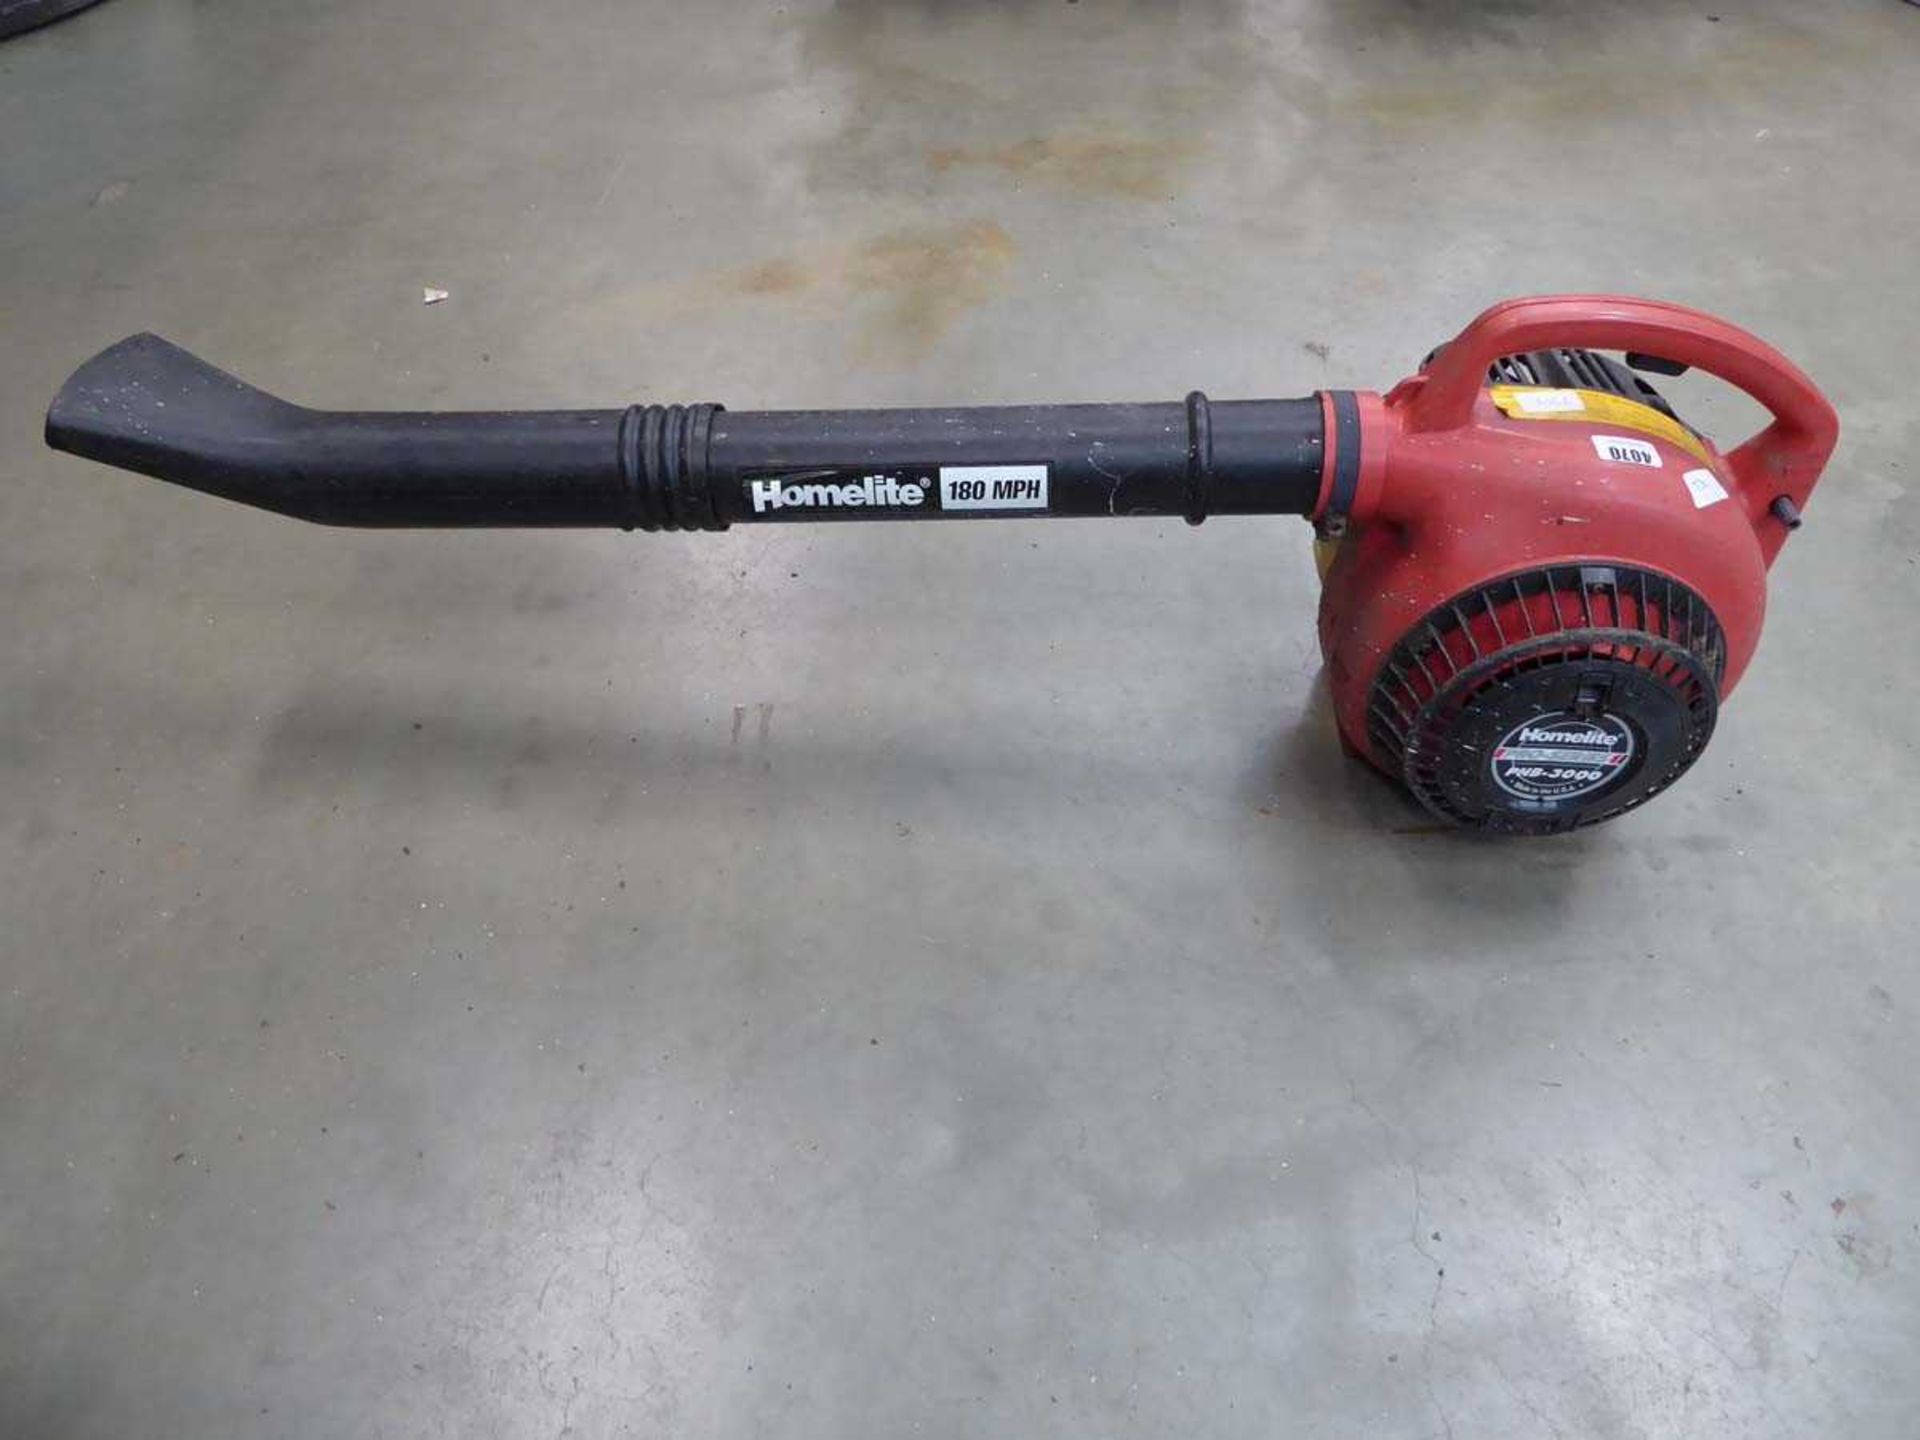 Homelite red petrol powered leaf blower